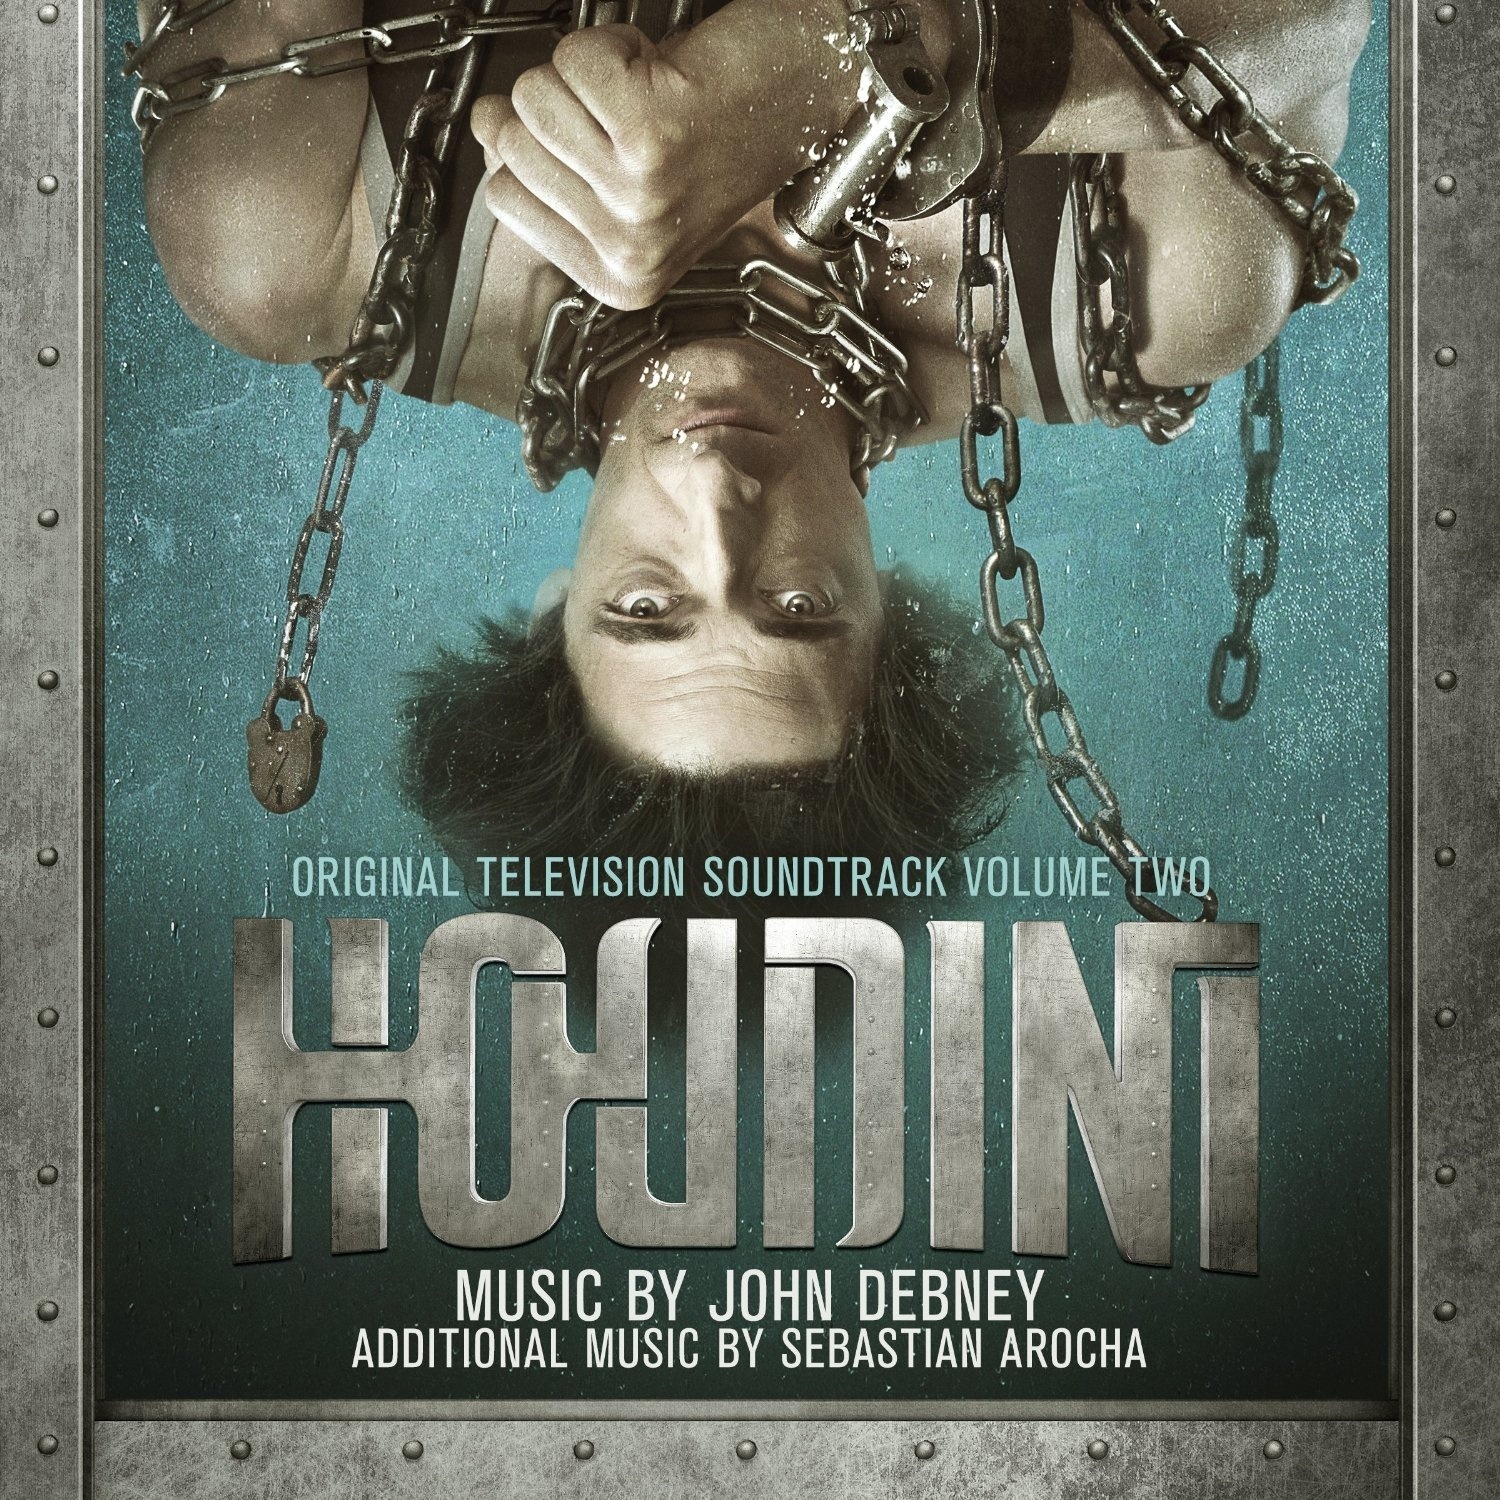 San Francisco Debunked S beng nce  Houdini Challenges Spiritualism